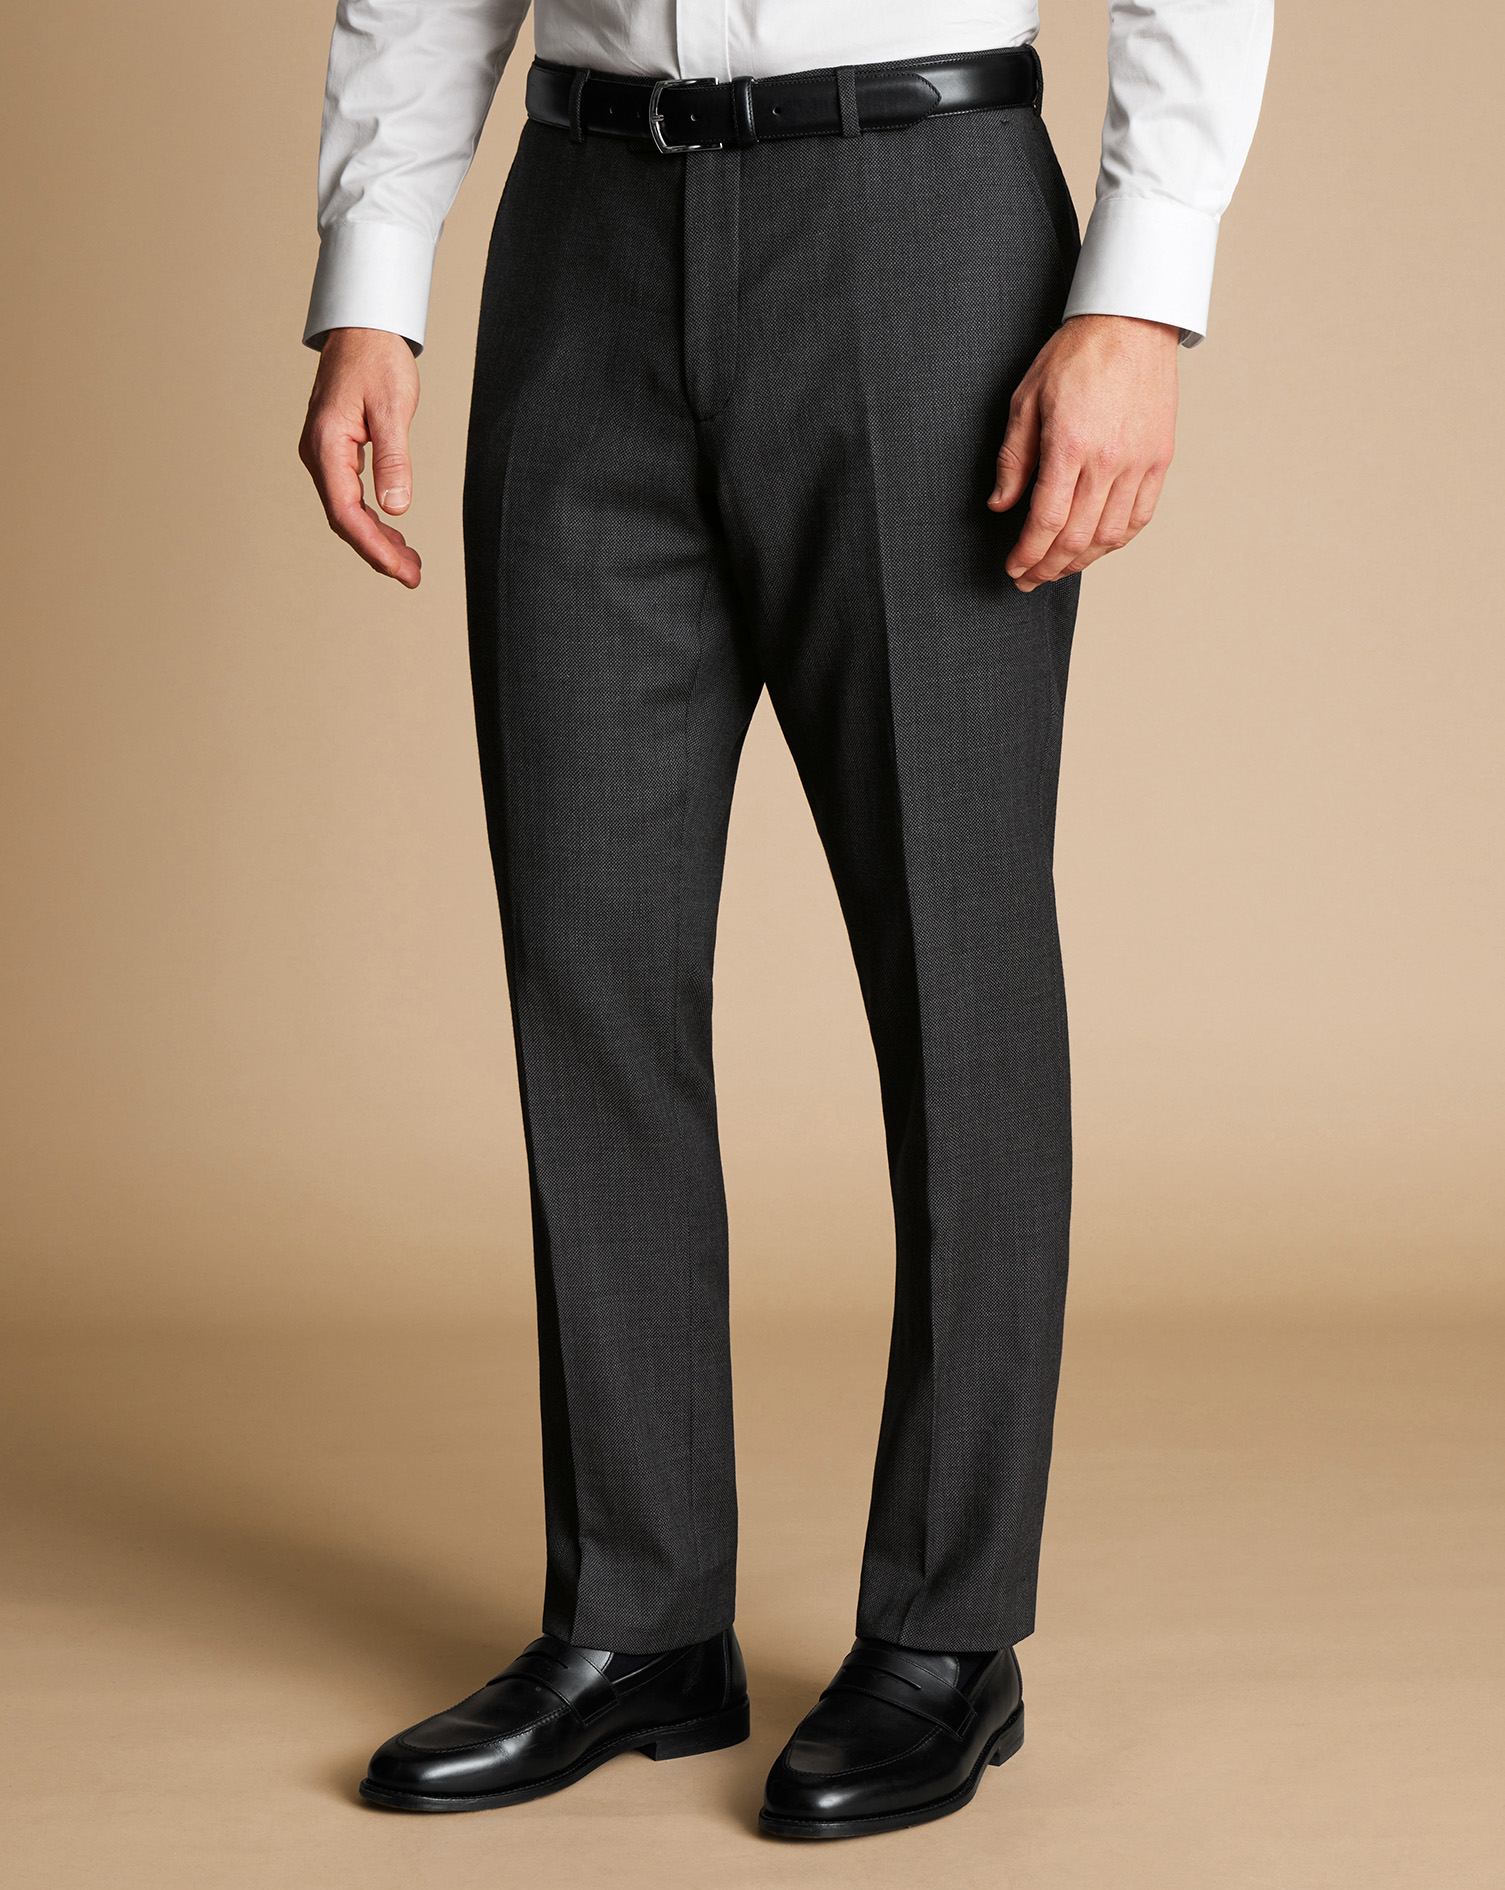 Men's Charles Tyrwhitt Ultimate Performance Birdseye Suit Trousers - Grey Size 36/34 Wool
